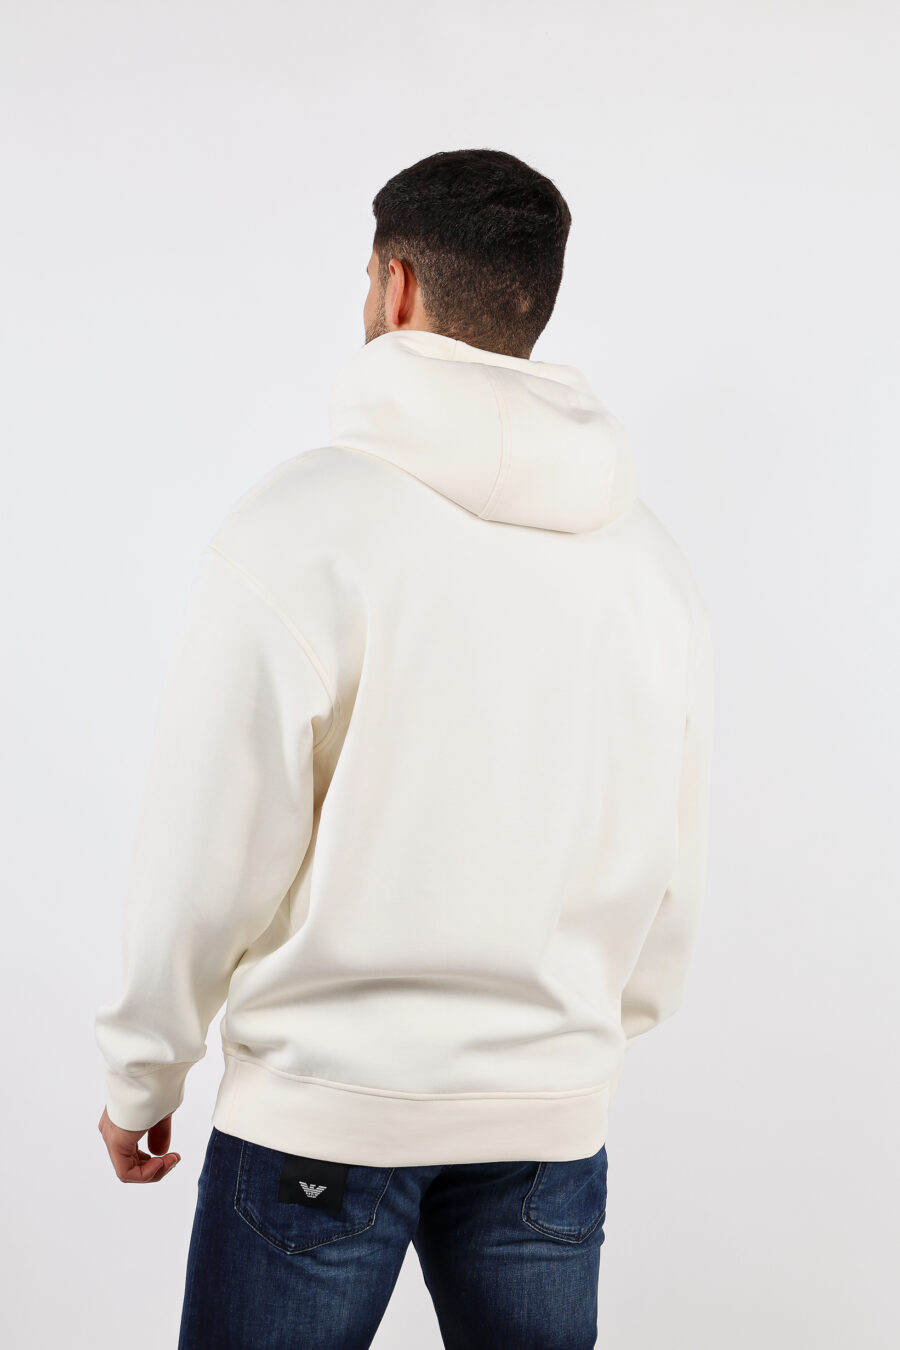 Cream hooded sweatshirt with eagle maxilogue - BLS Fashion 124